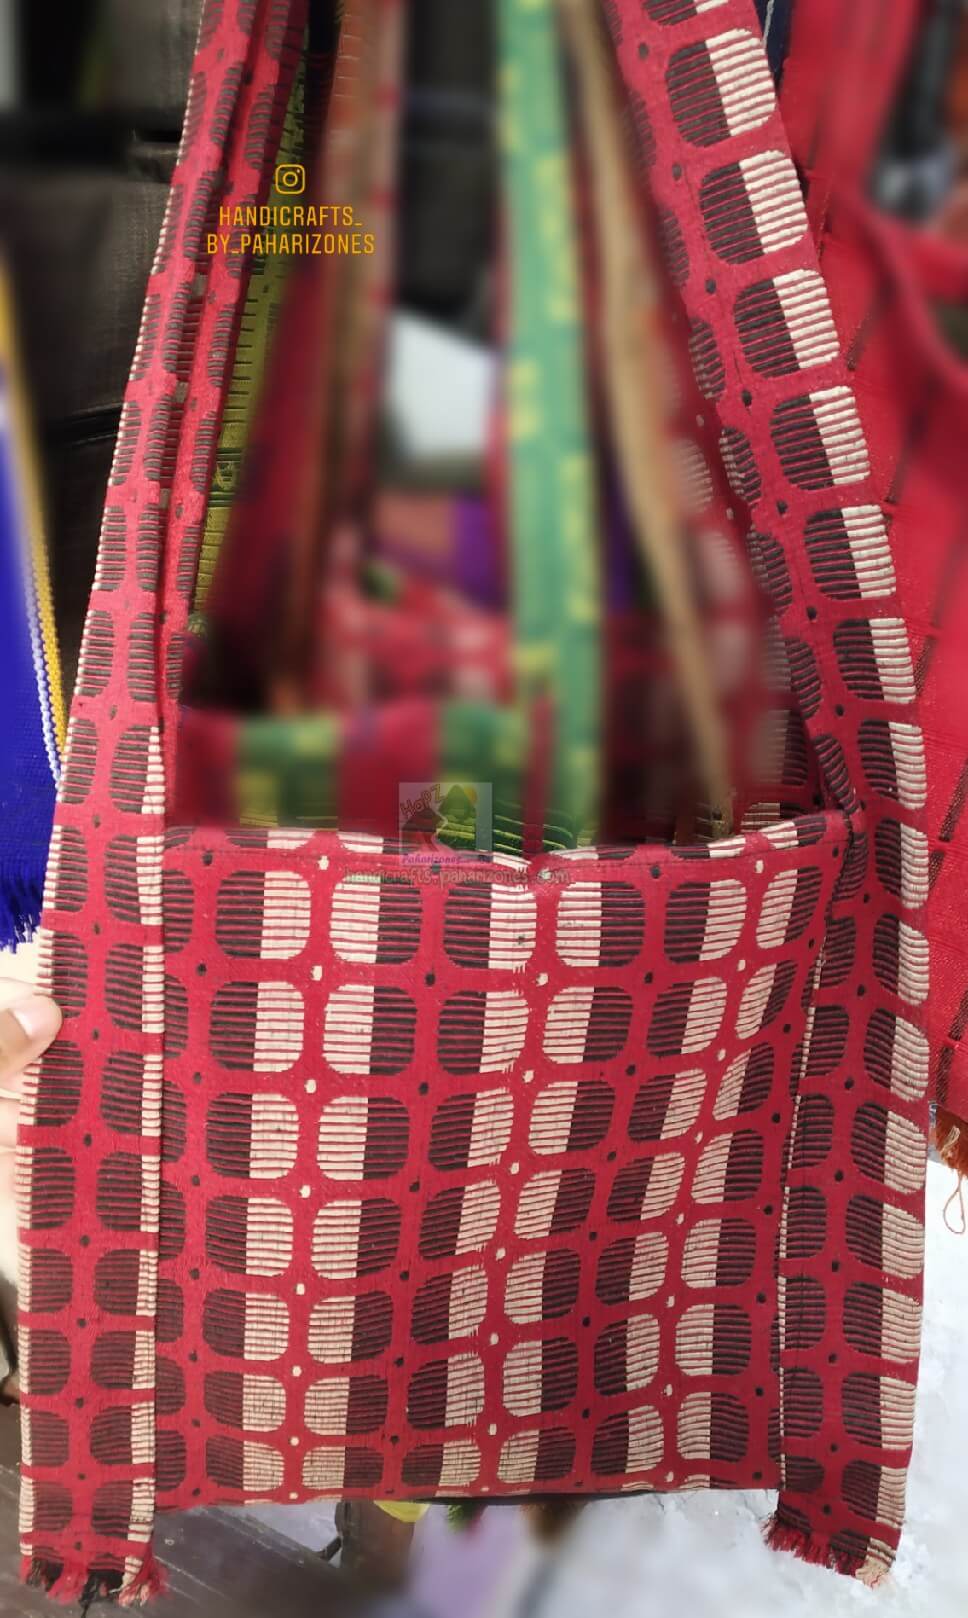 Handmade cloth bag patterns - Art & Craft Ideas | Patchwork bags, Bag  pattern, Cloth bags